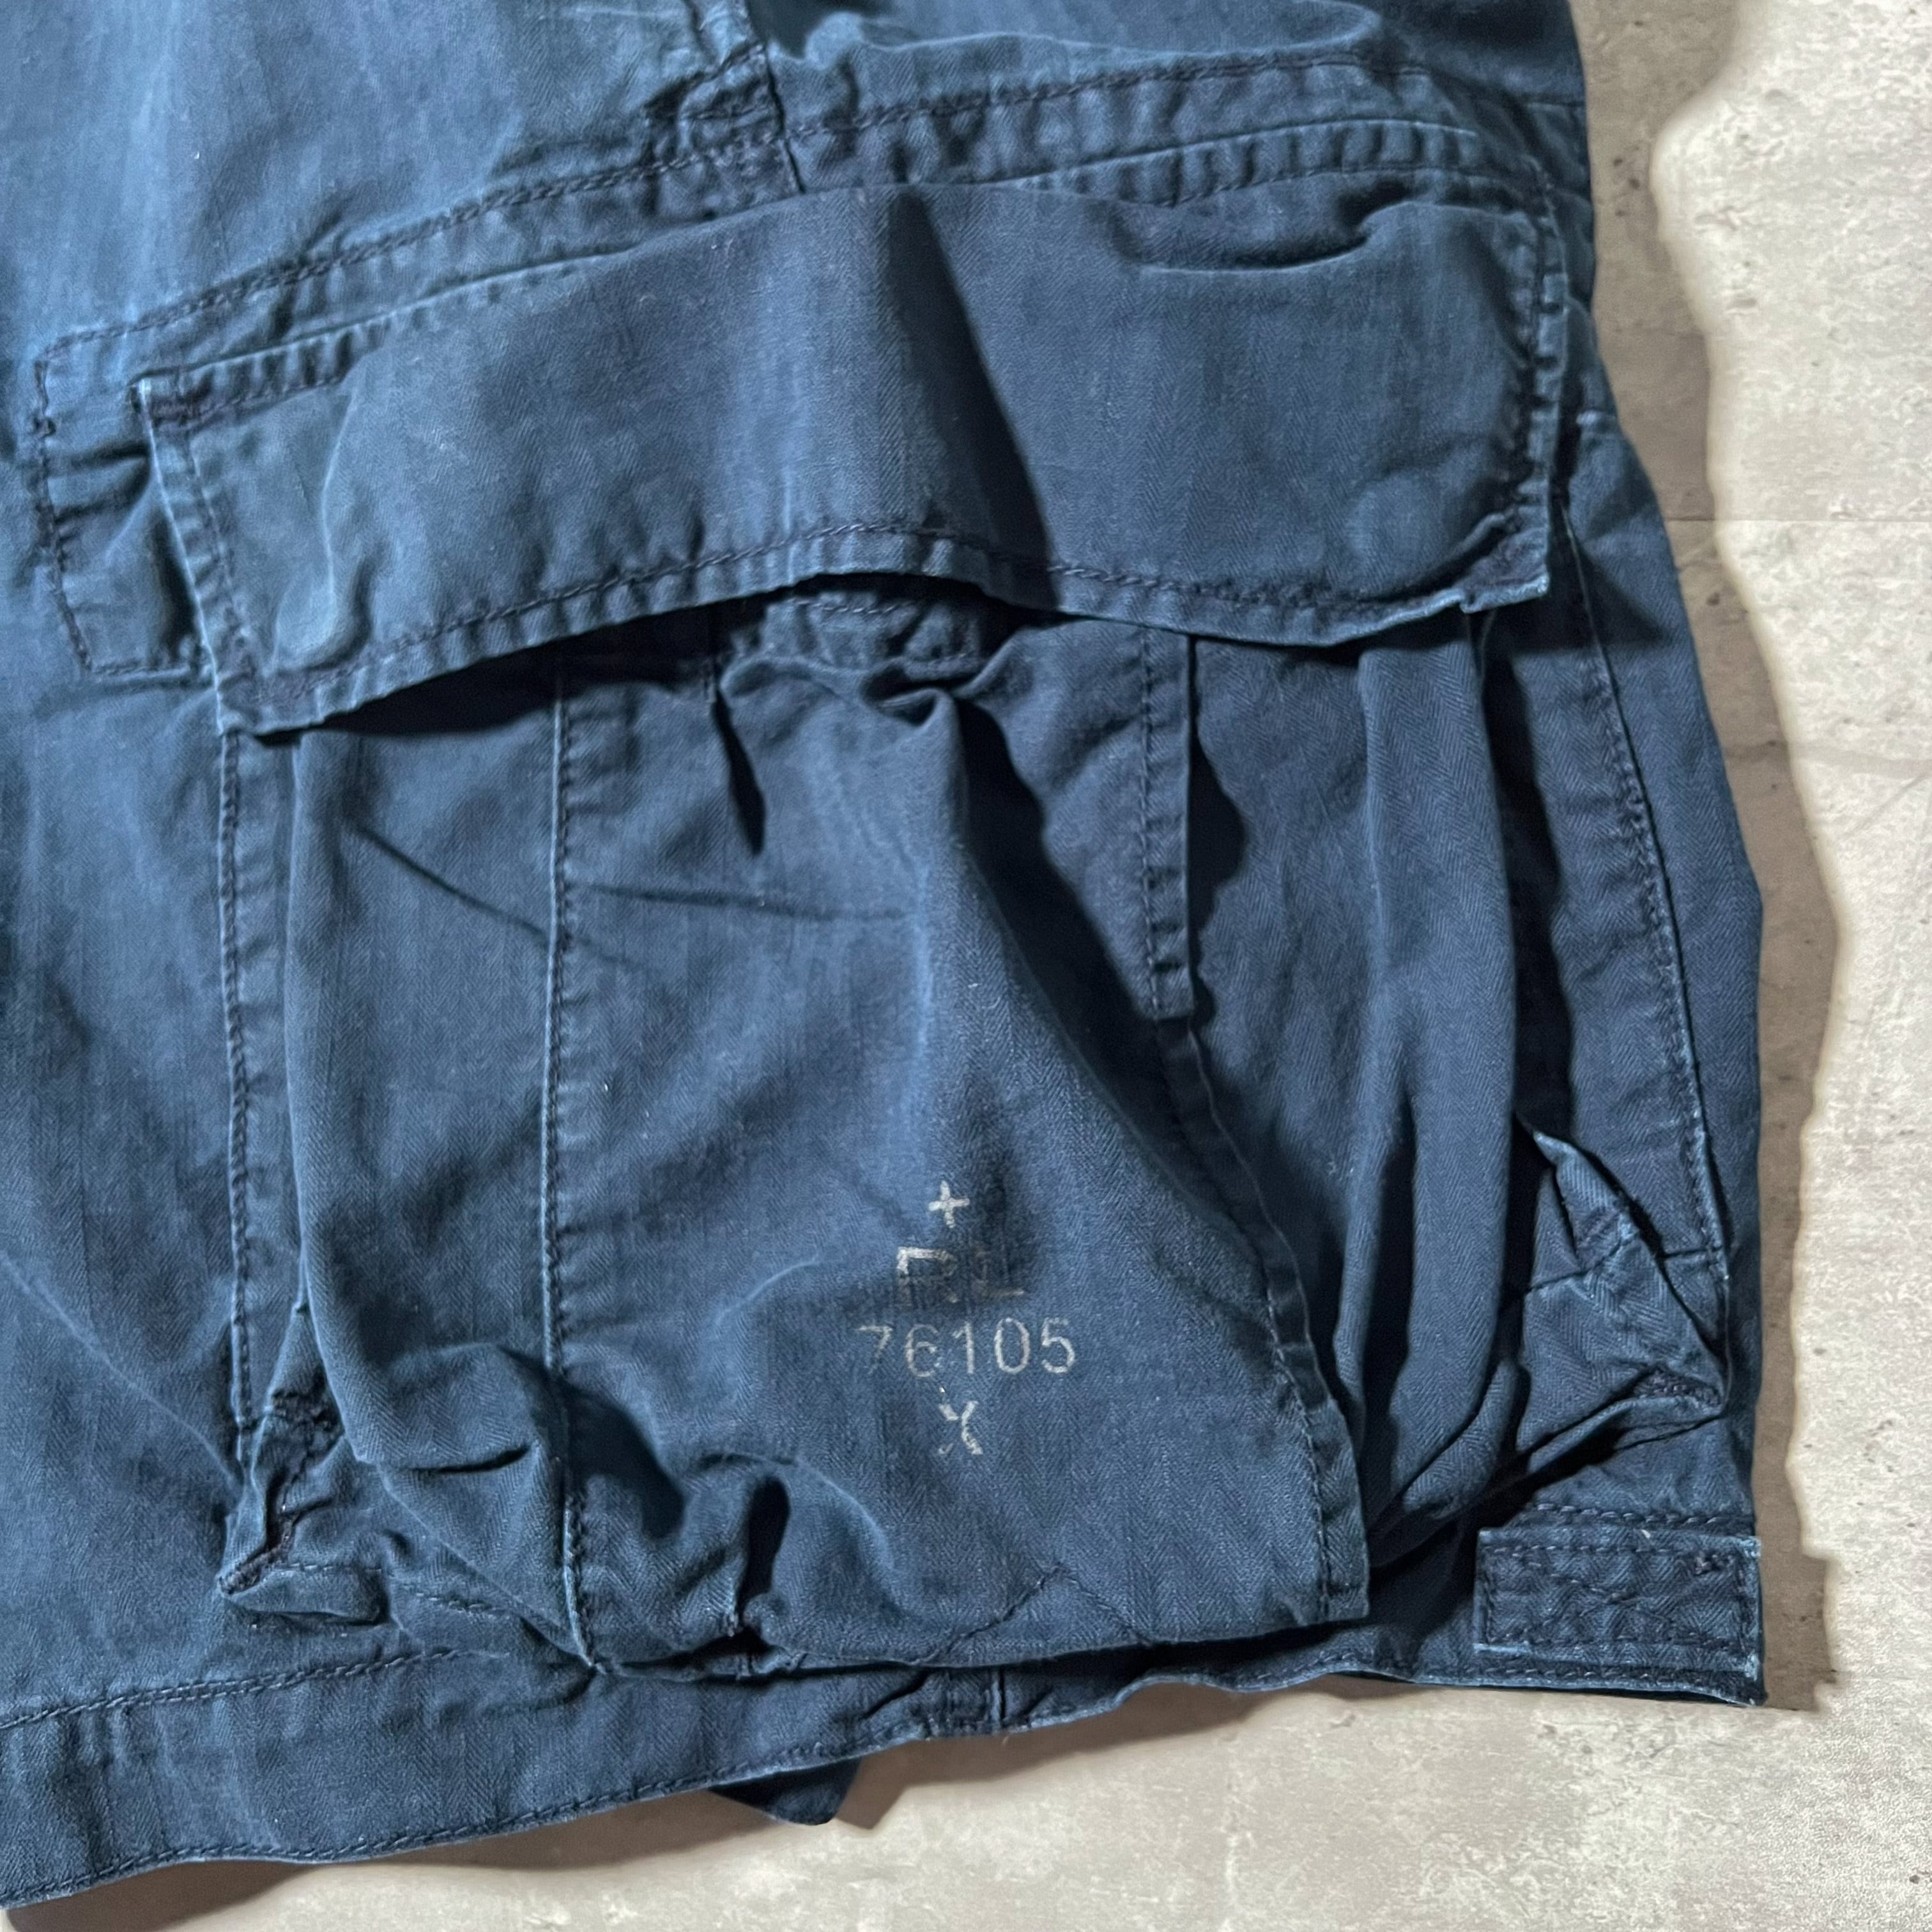 90s “polo by ralph lauren” herringbone cargo shorts conmer zip! 90 